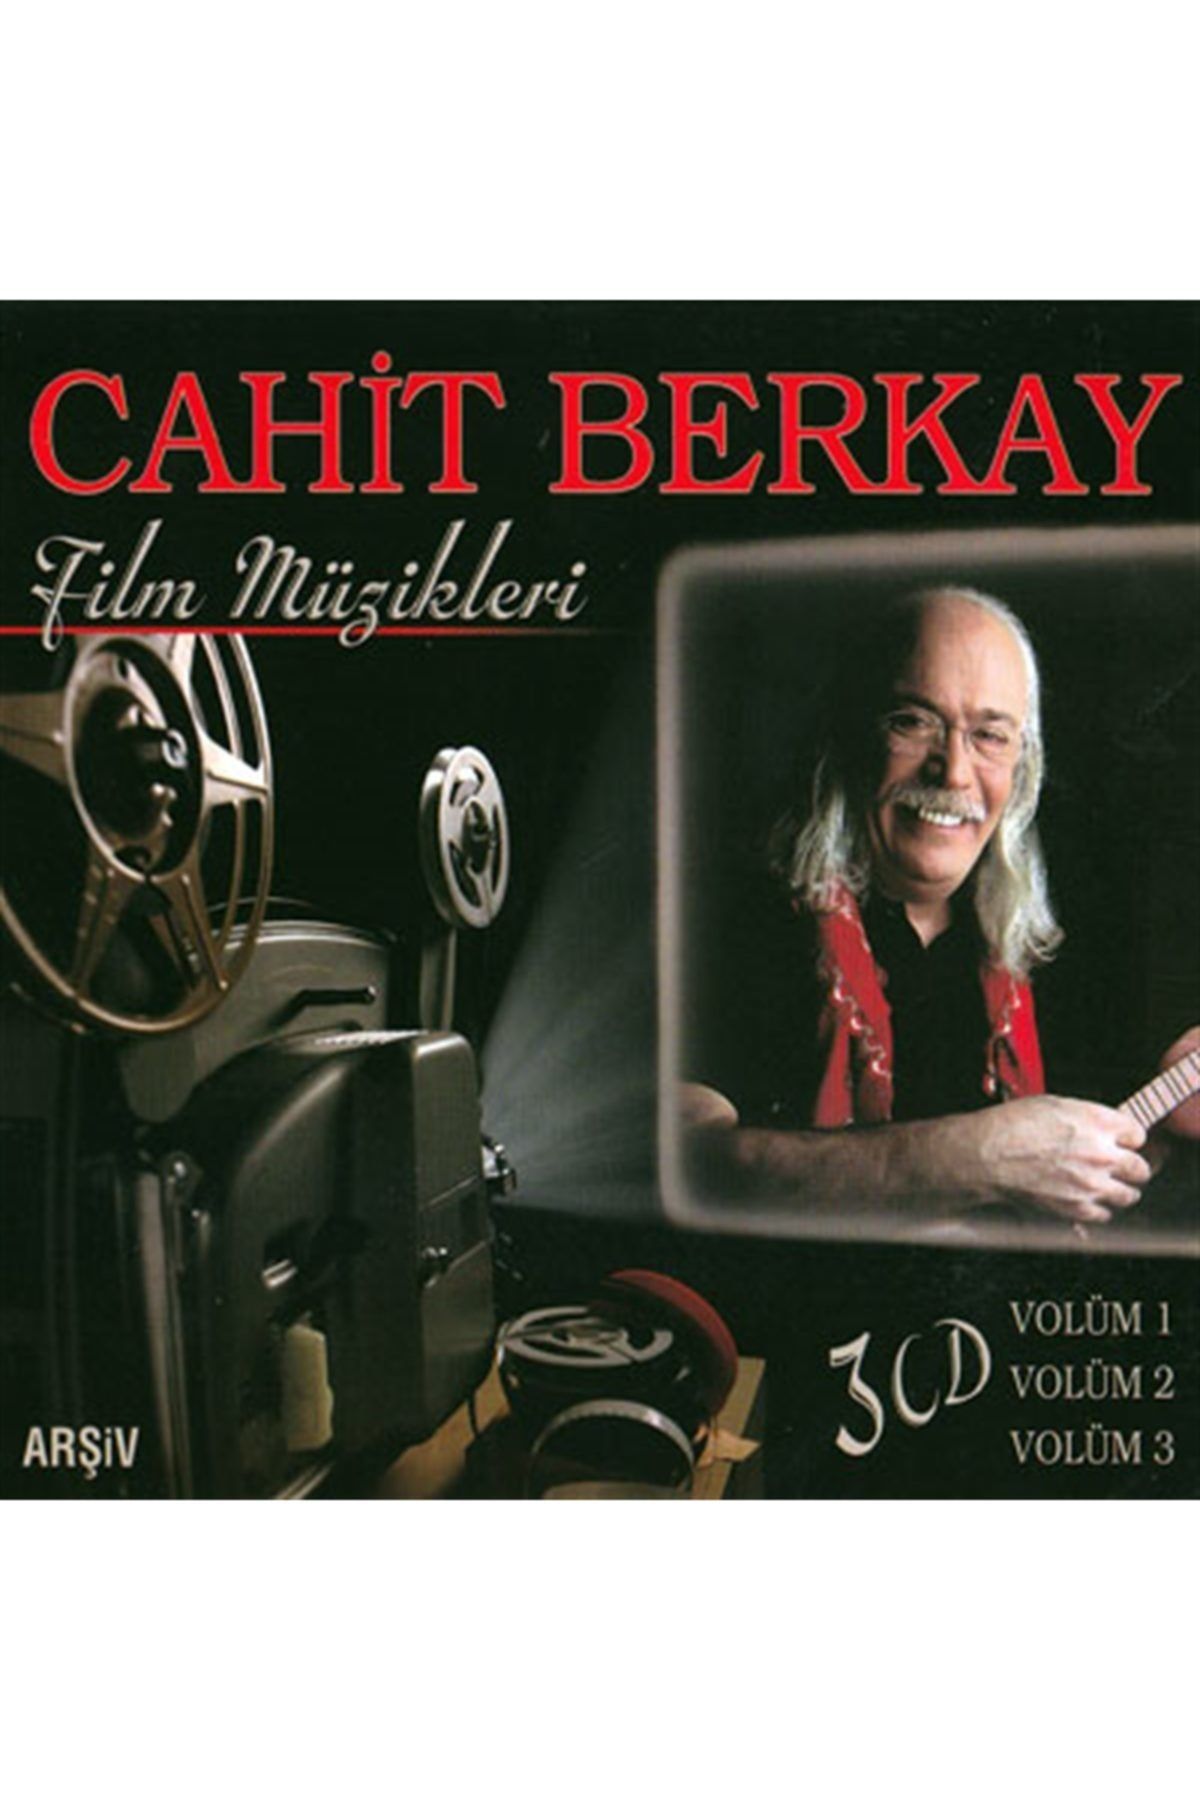 Pal Cd - Cahit Berkay - Arşiv / Film Müzikleri (3 Cd)